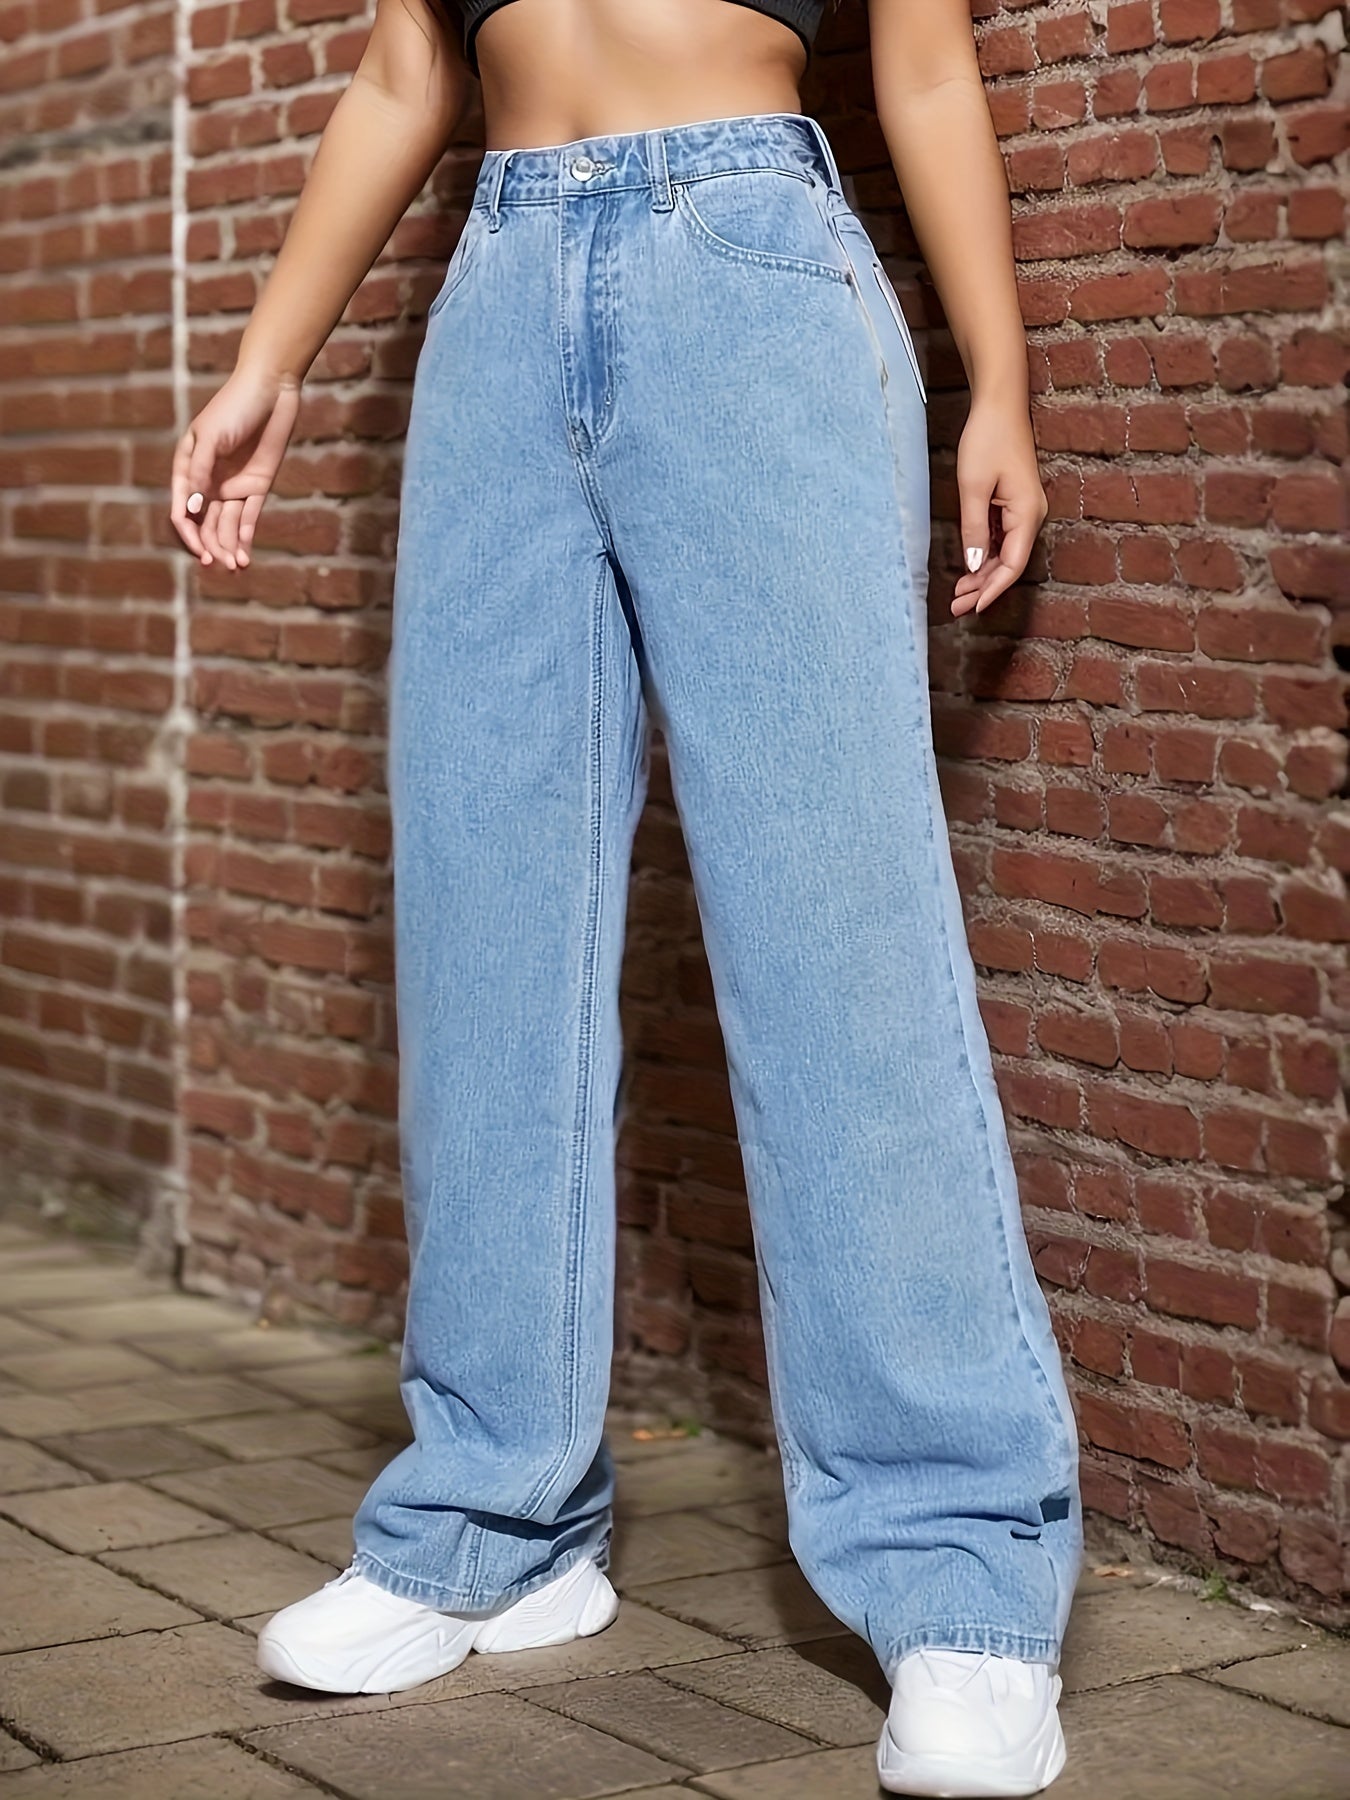 Antmvs Blue Loose Fit Straight Jeans, Non-Stretch Slant Pockets Washed Denim Pants, Women's Denim Jeans & Clothing